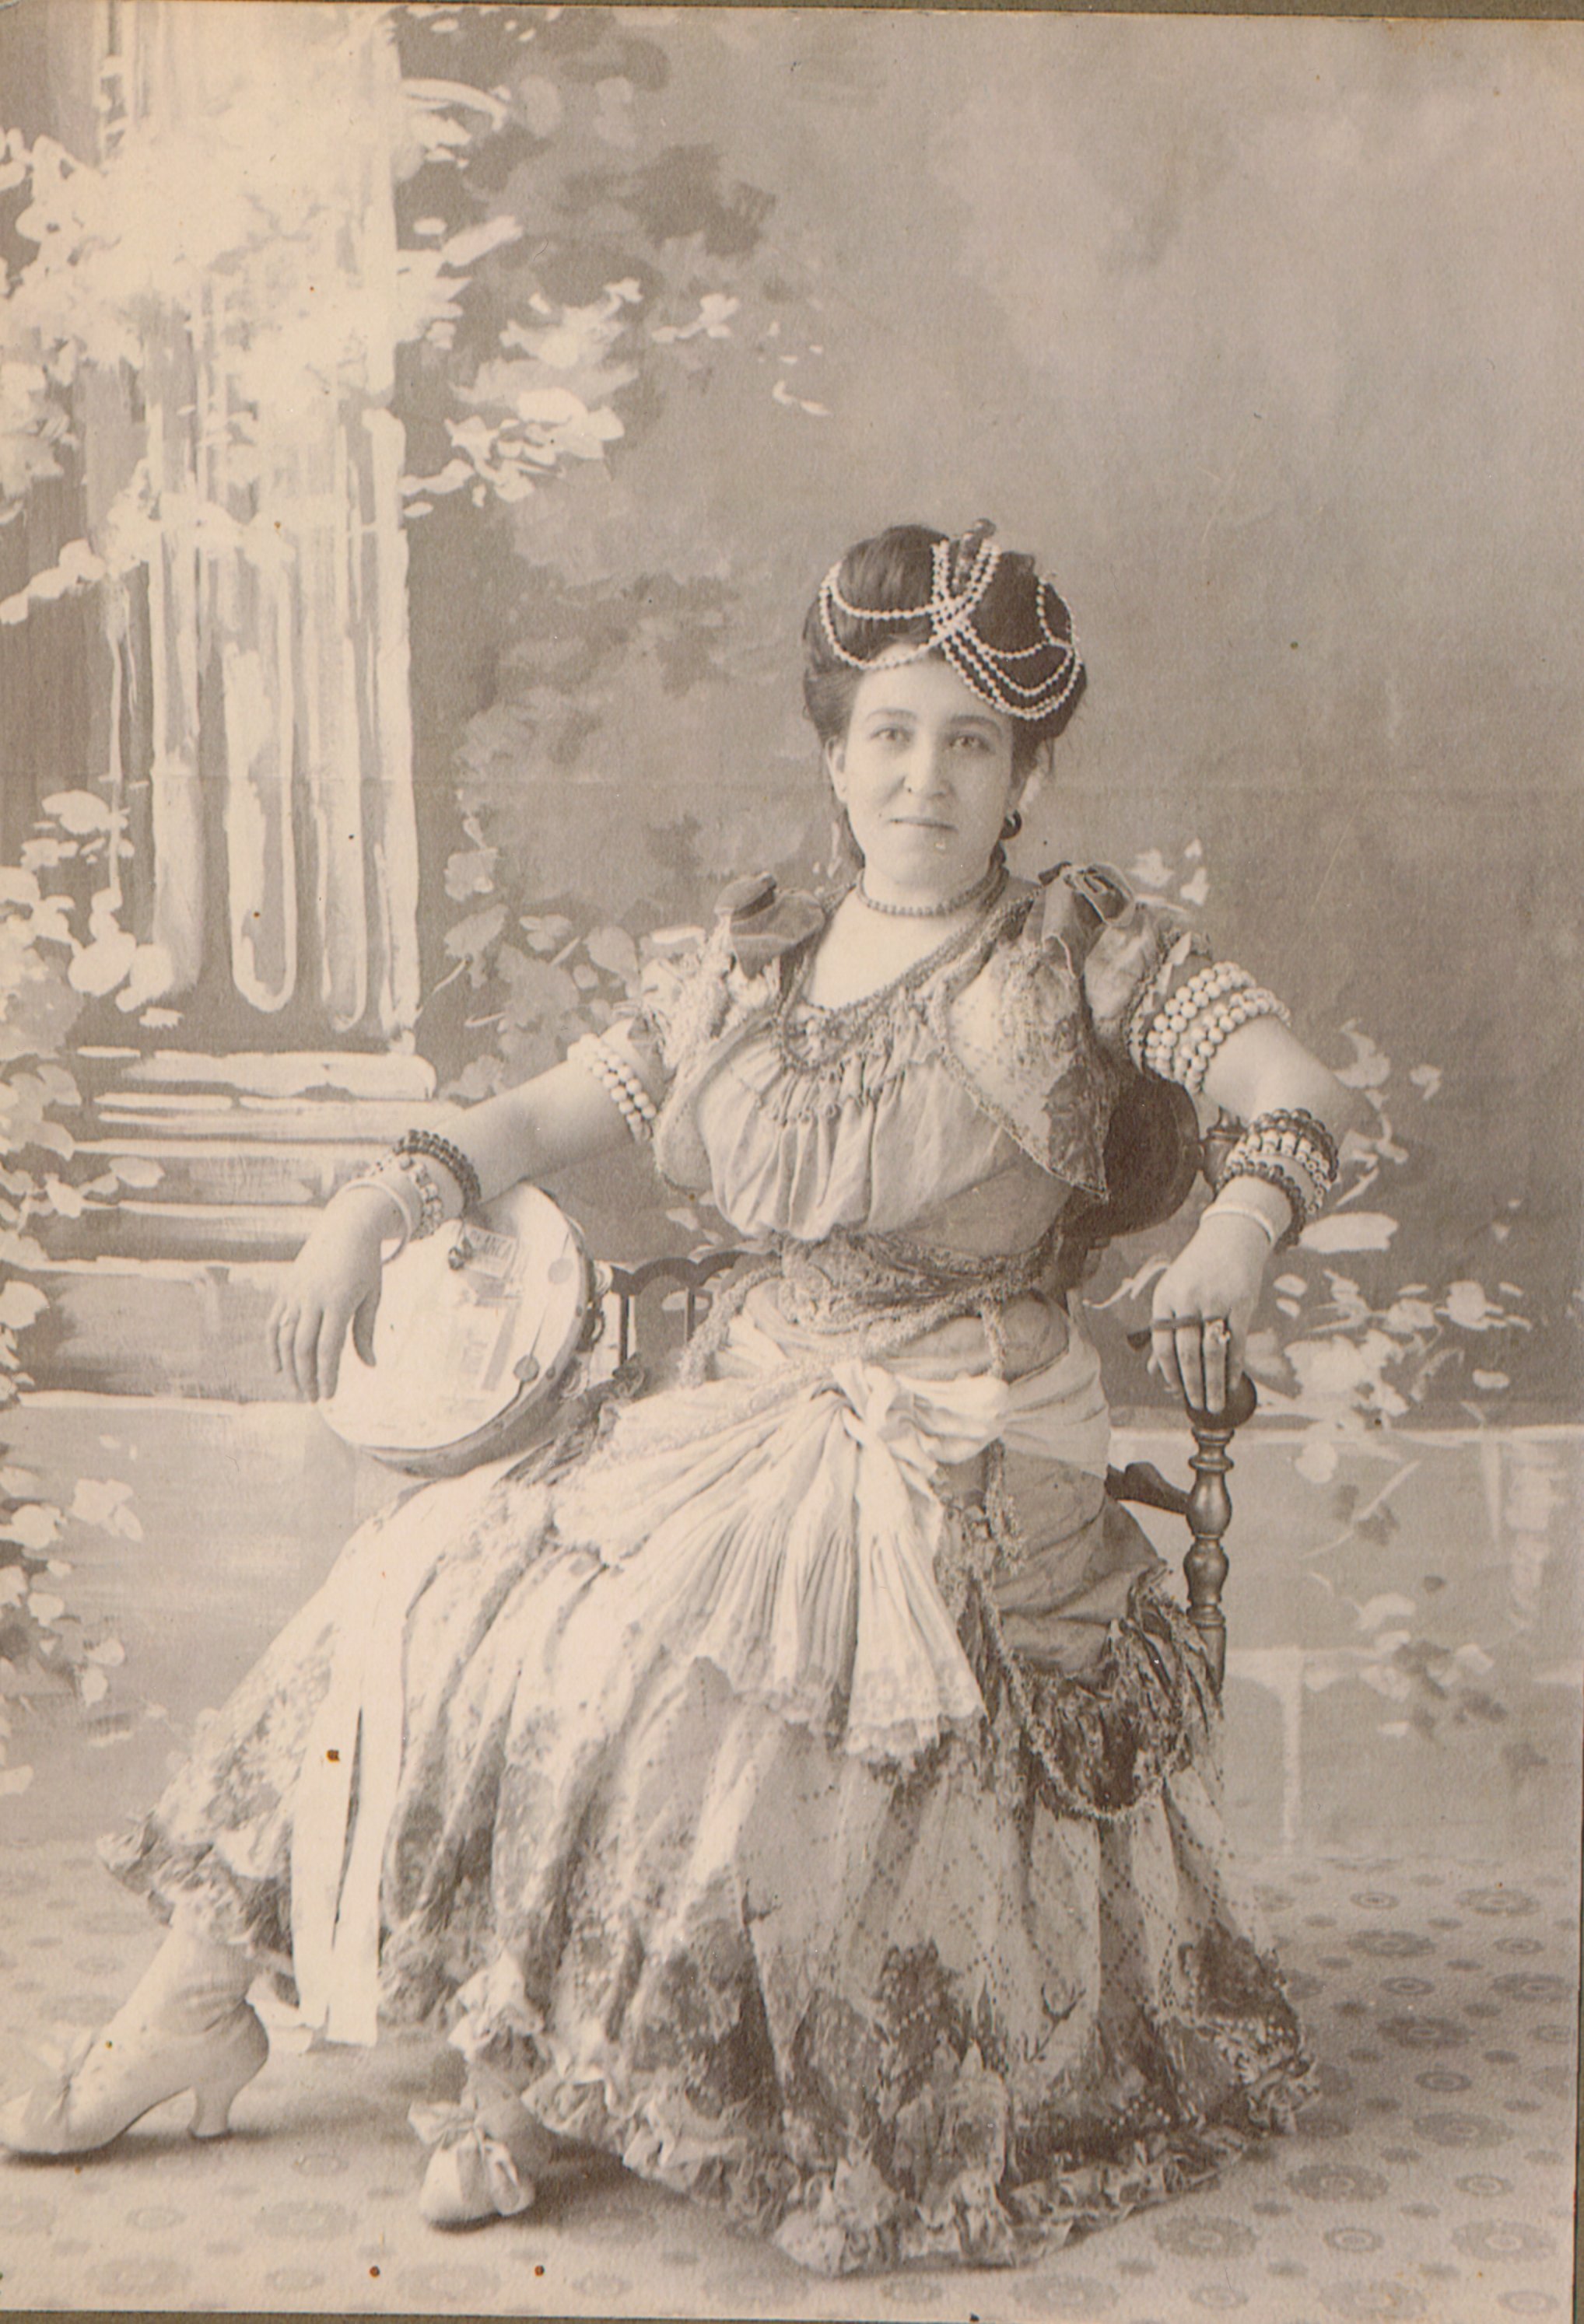 Concepción "Concha" (Luján) Newman (1884-1953), daughter of José Mauro Luján